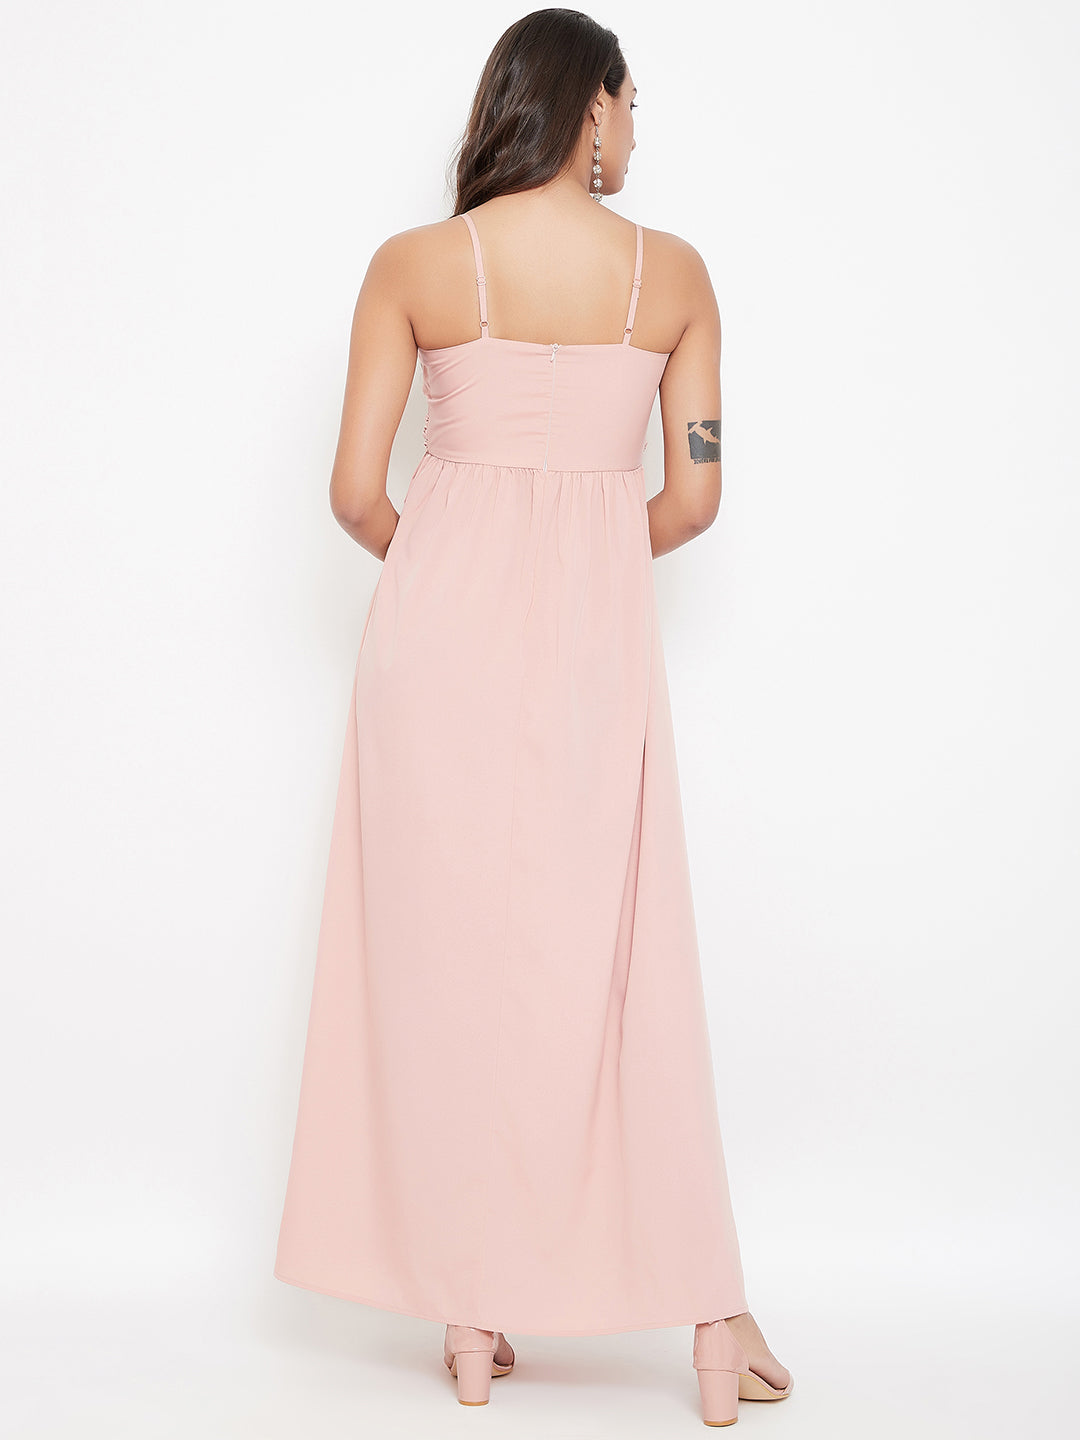 Berrylush Women Solid Pink V-Neck Sleeveless Ruched Maxi Dress